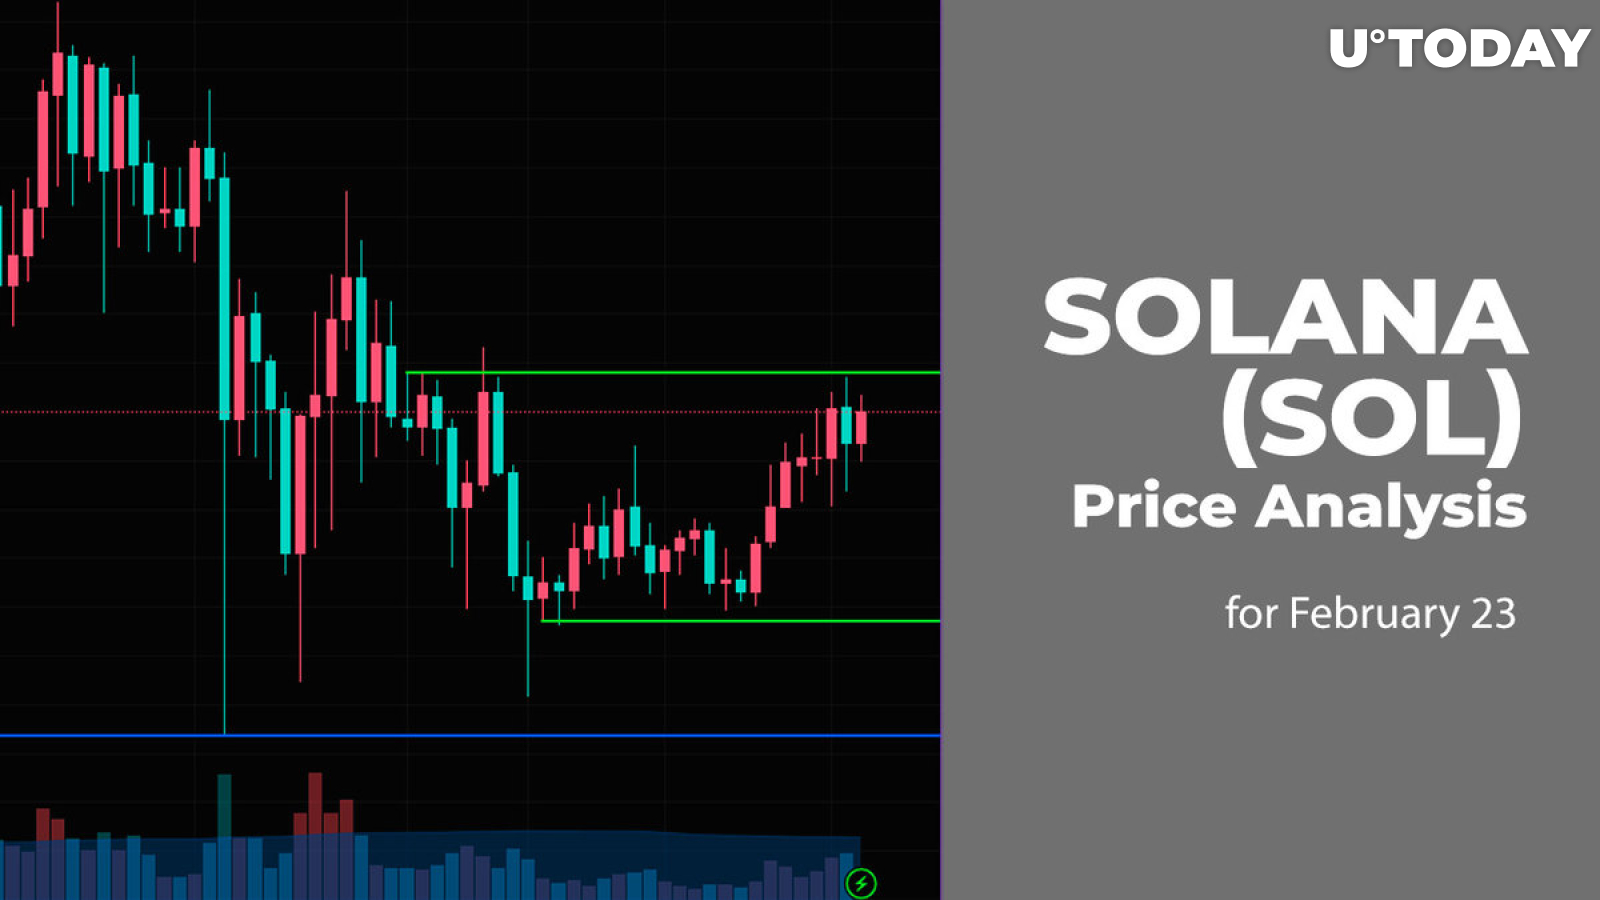 Solana (SOL) Price Prediction for February 23